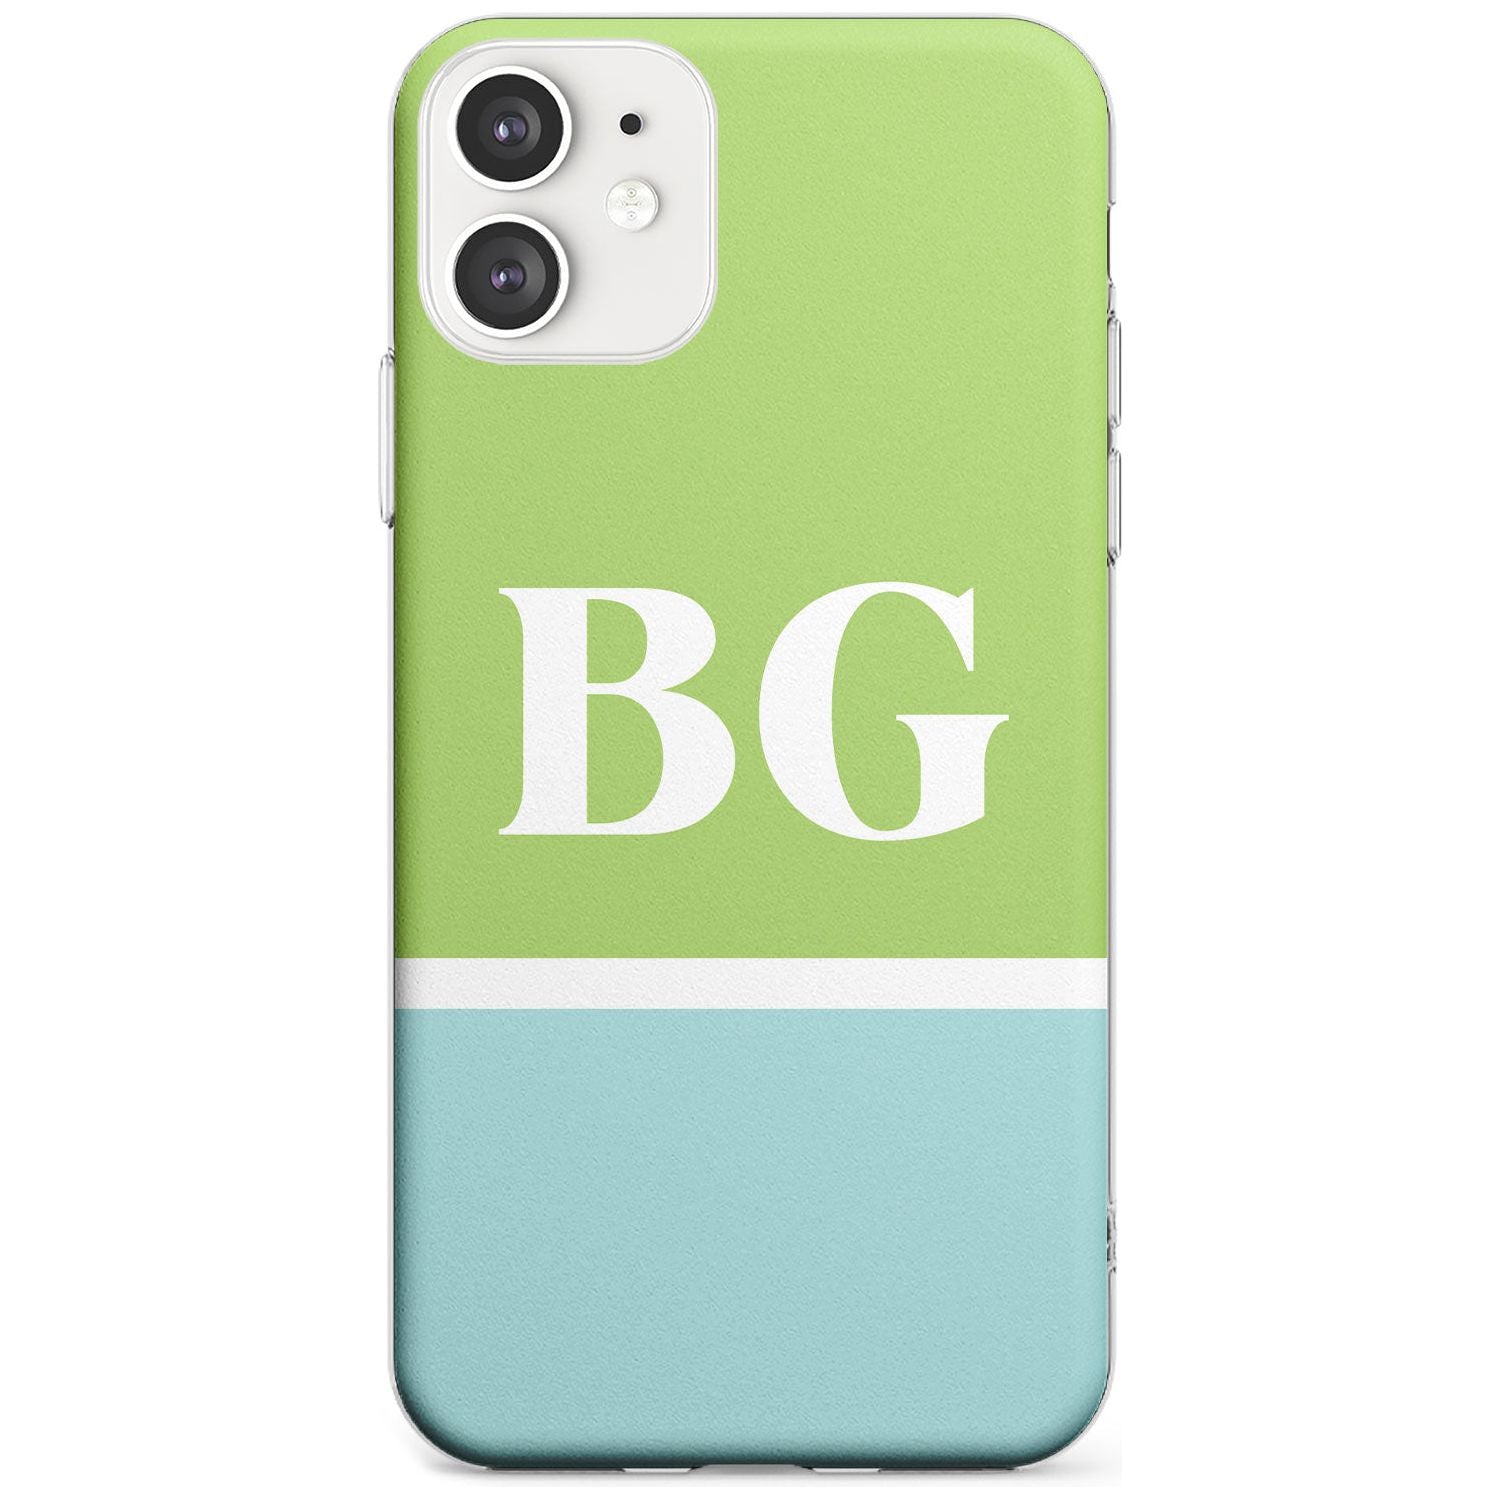 Colourblock: Green & Turquoise Slim TPU Phone Case for iPhone 11